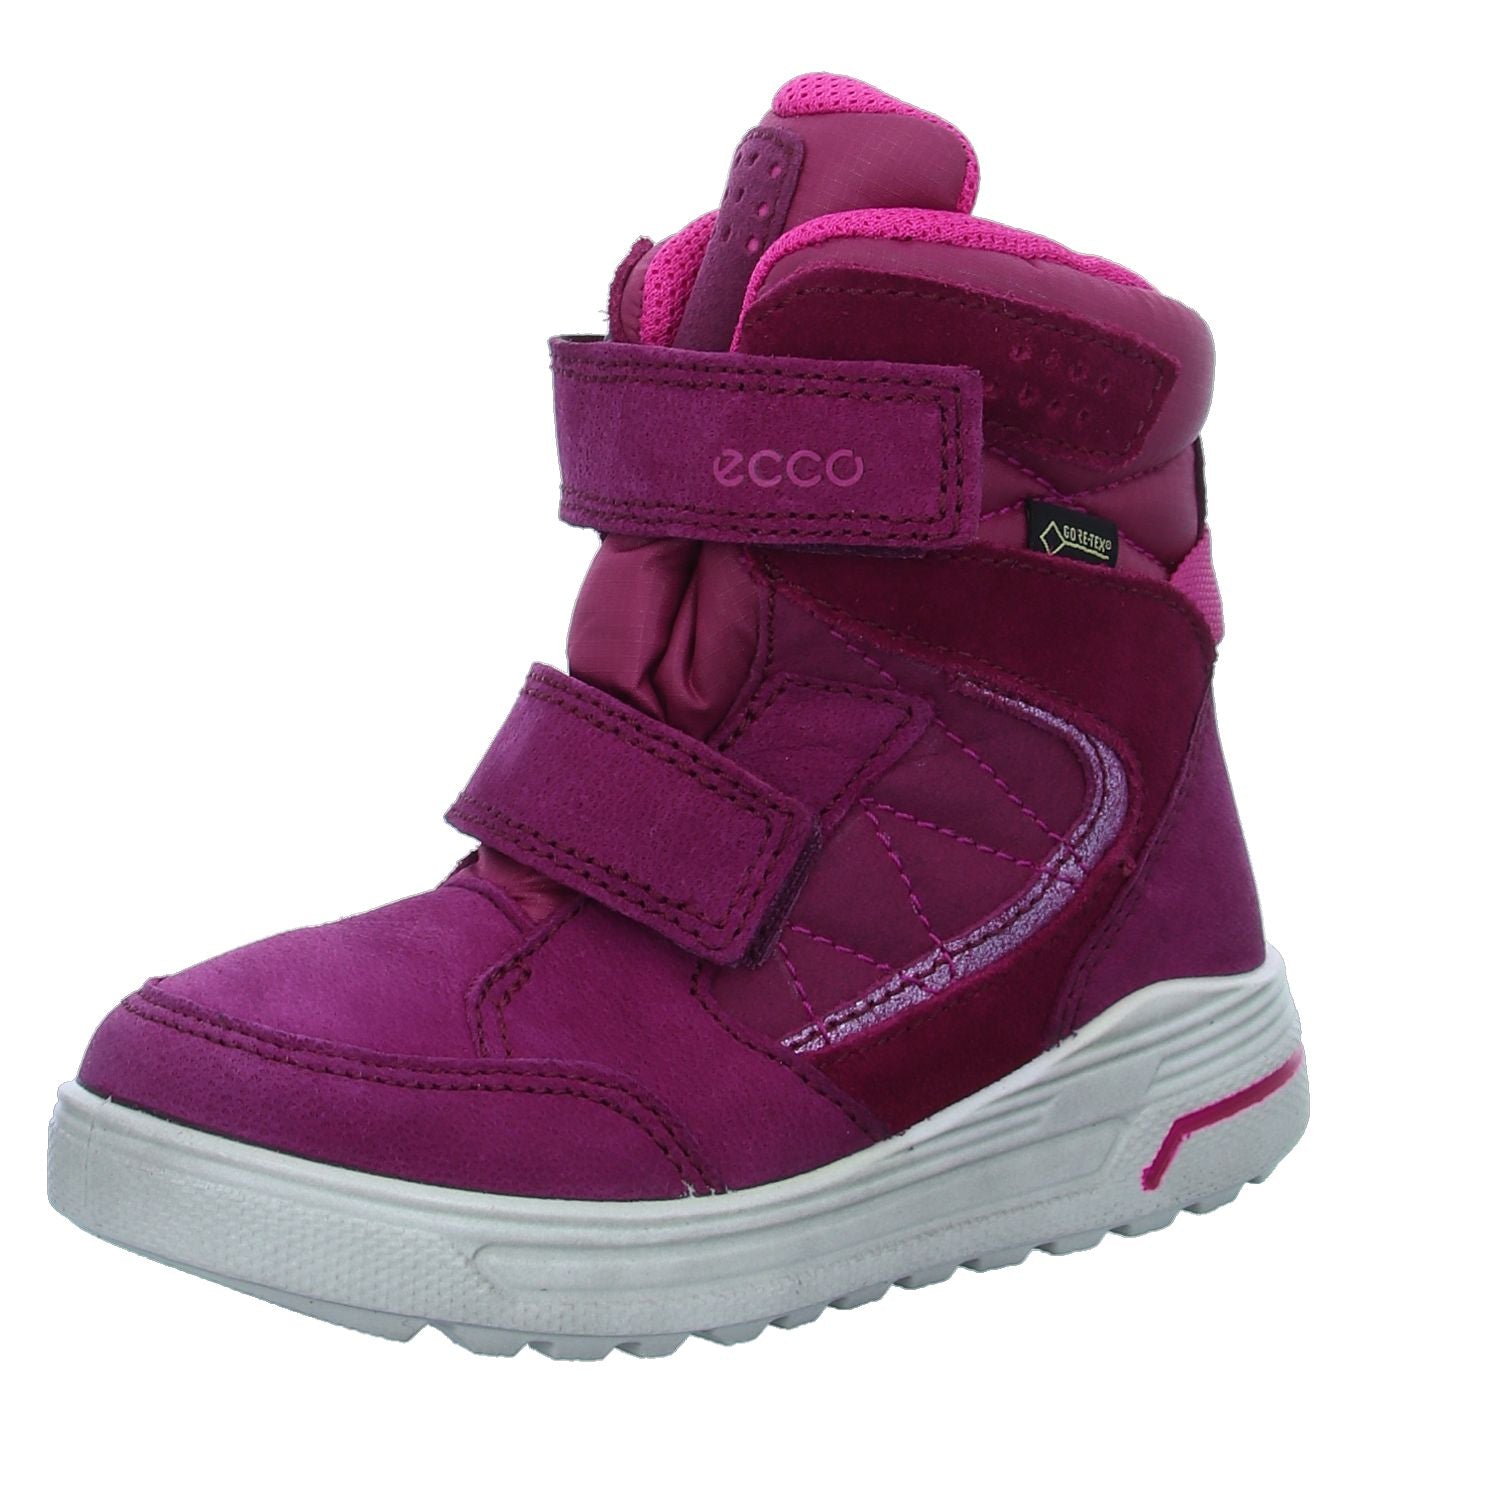 Ecco Girls Boots purple/pink SNOWBOARDER - Bartel-Shop